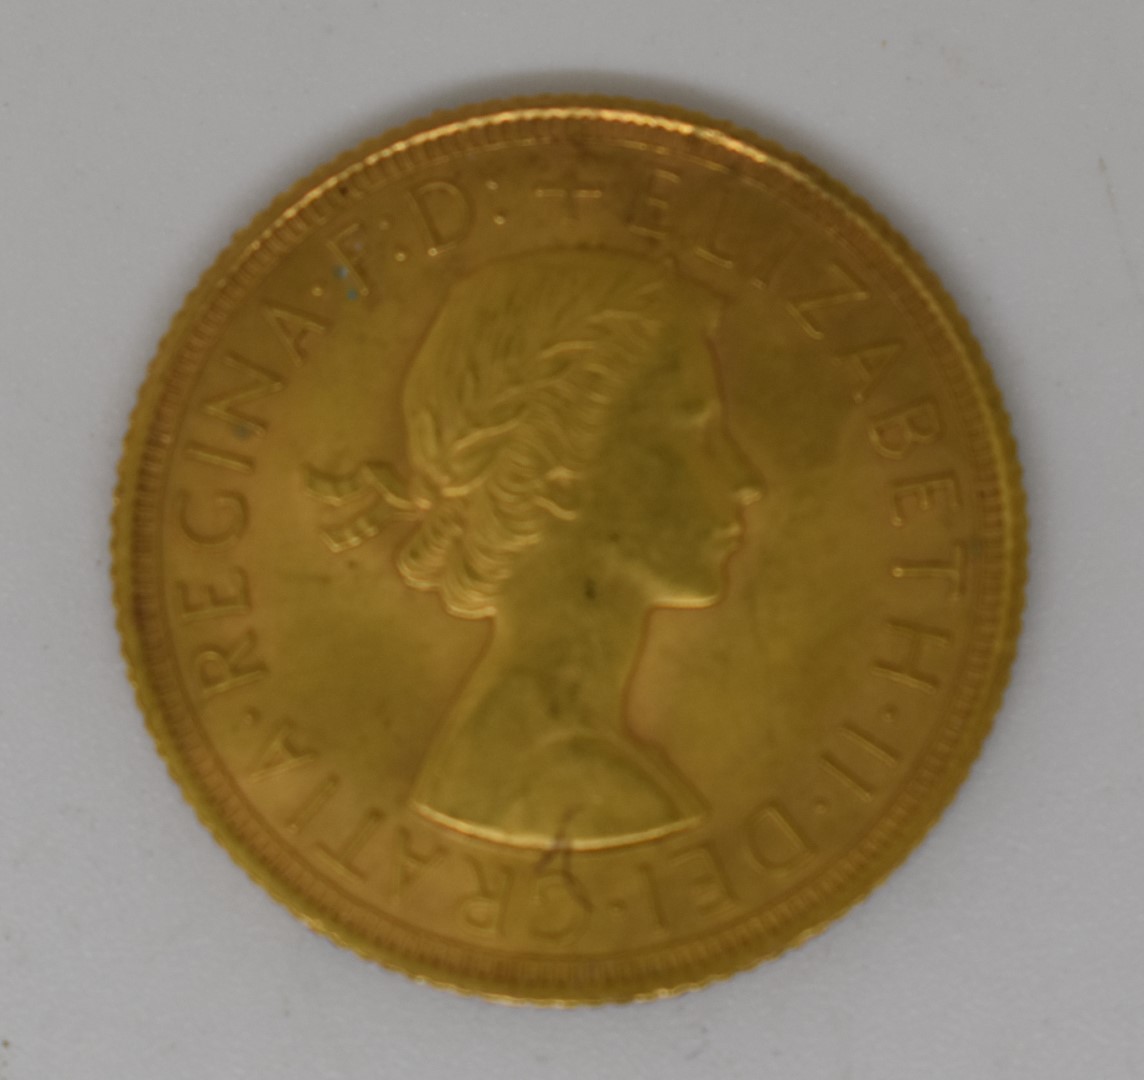 1958 Elizabeth II gold full sovereign